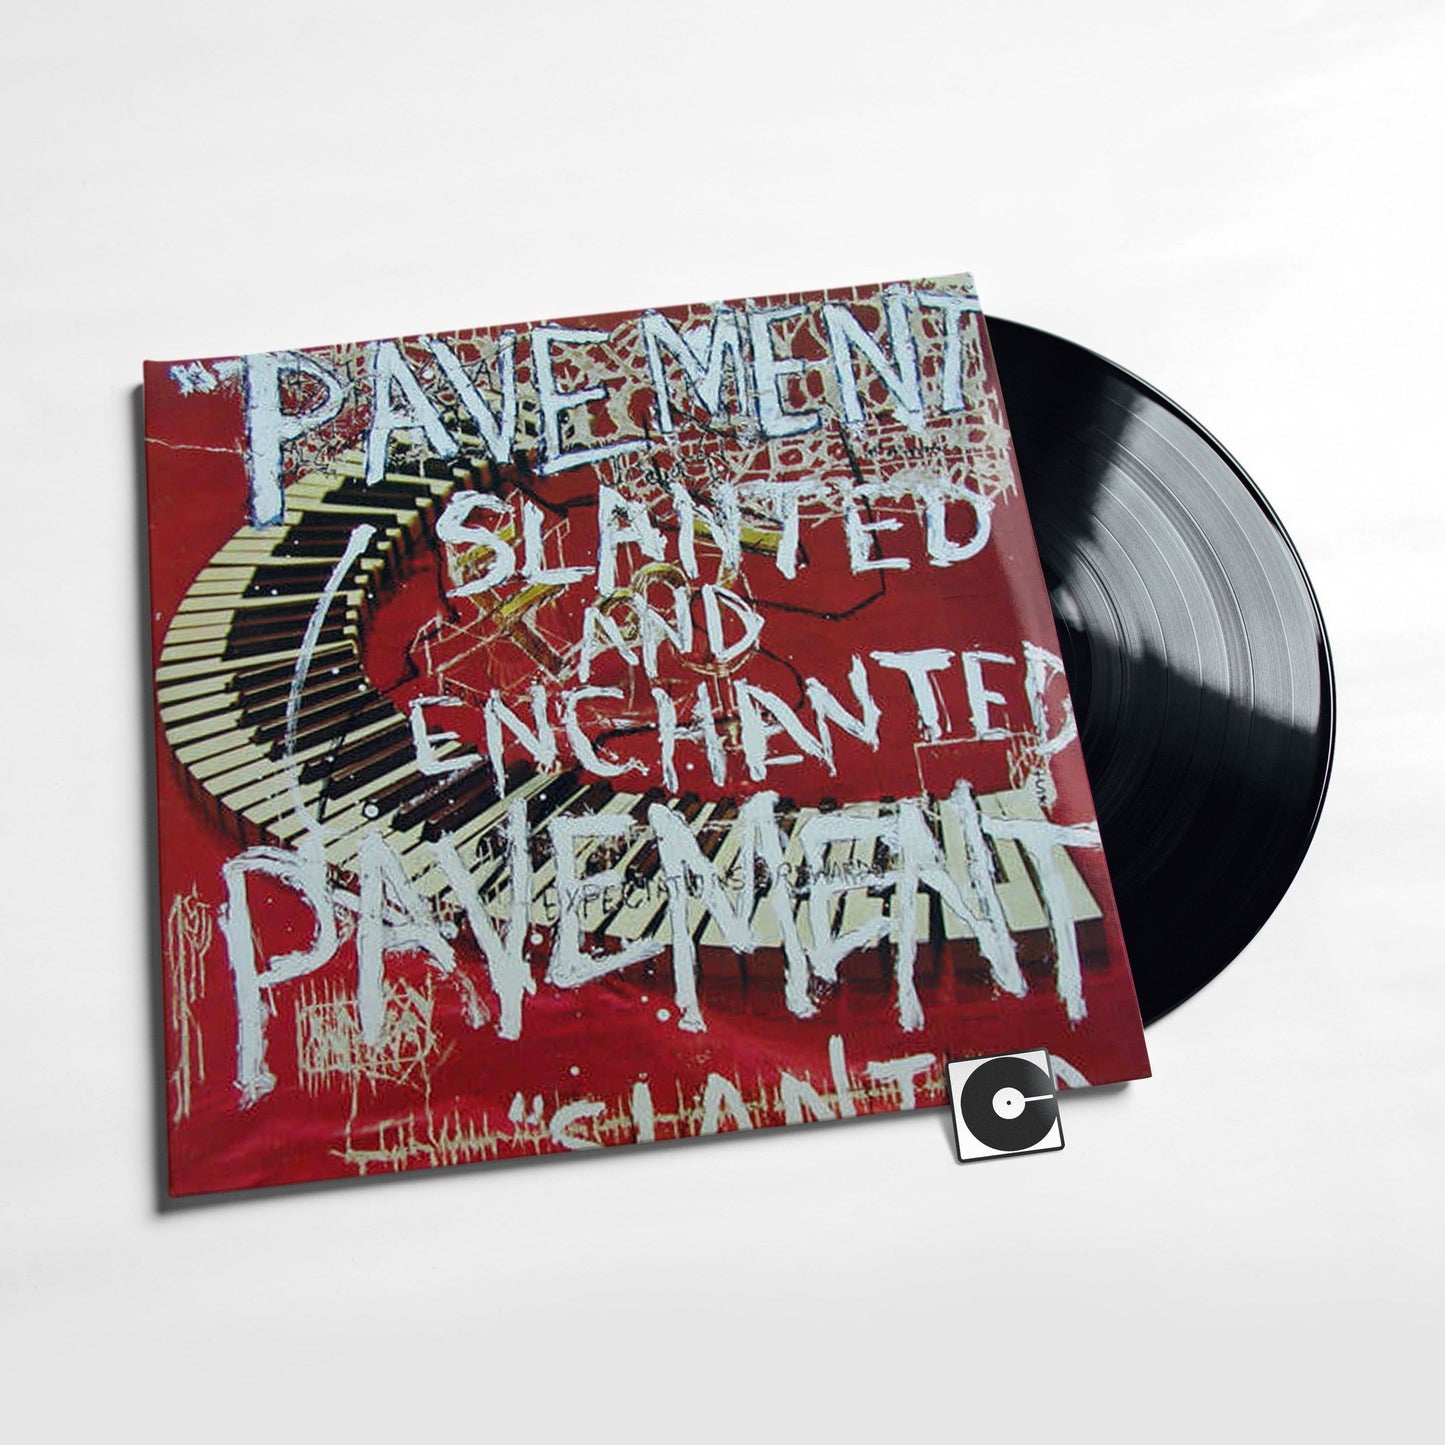 Pavement - "Slanted And Enchanted"